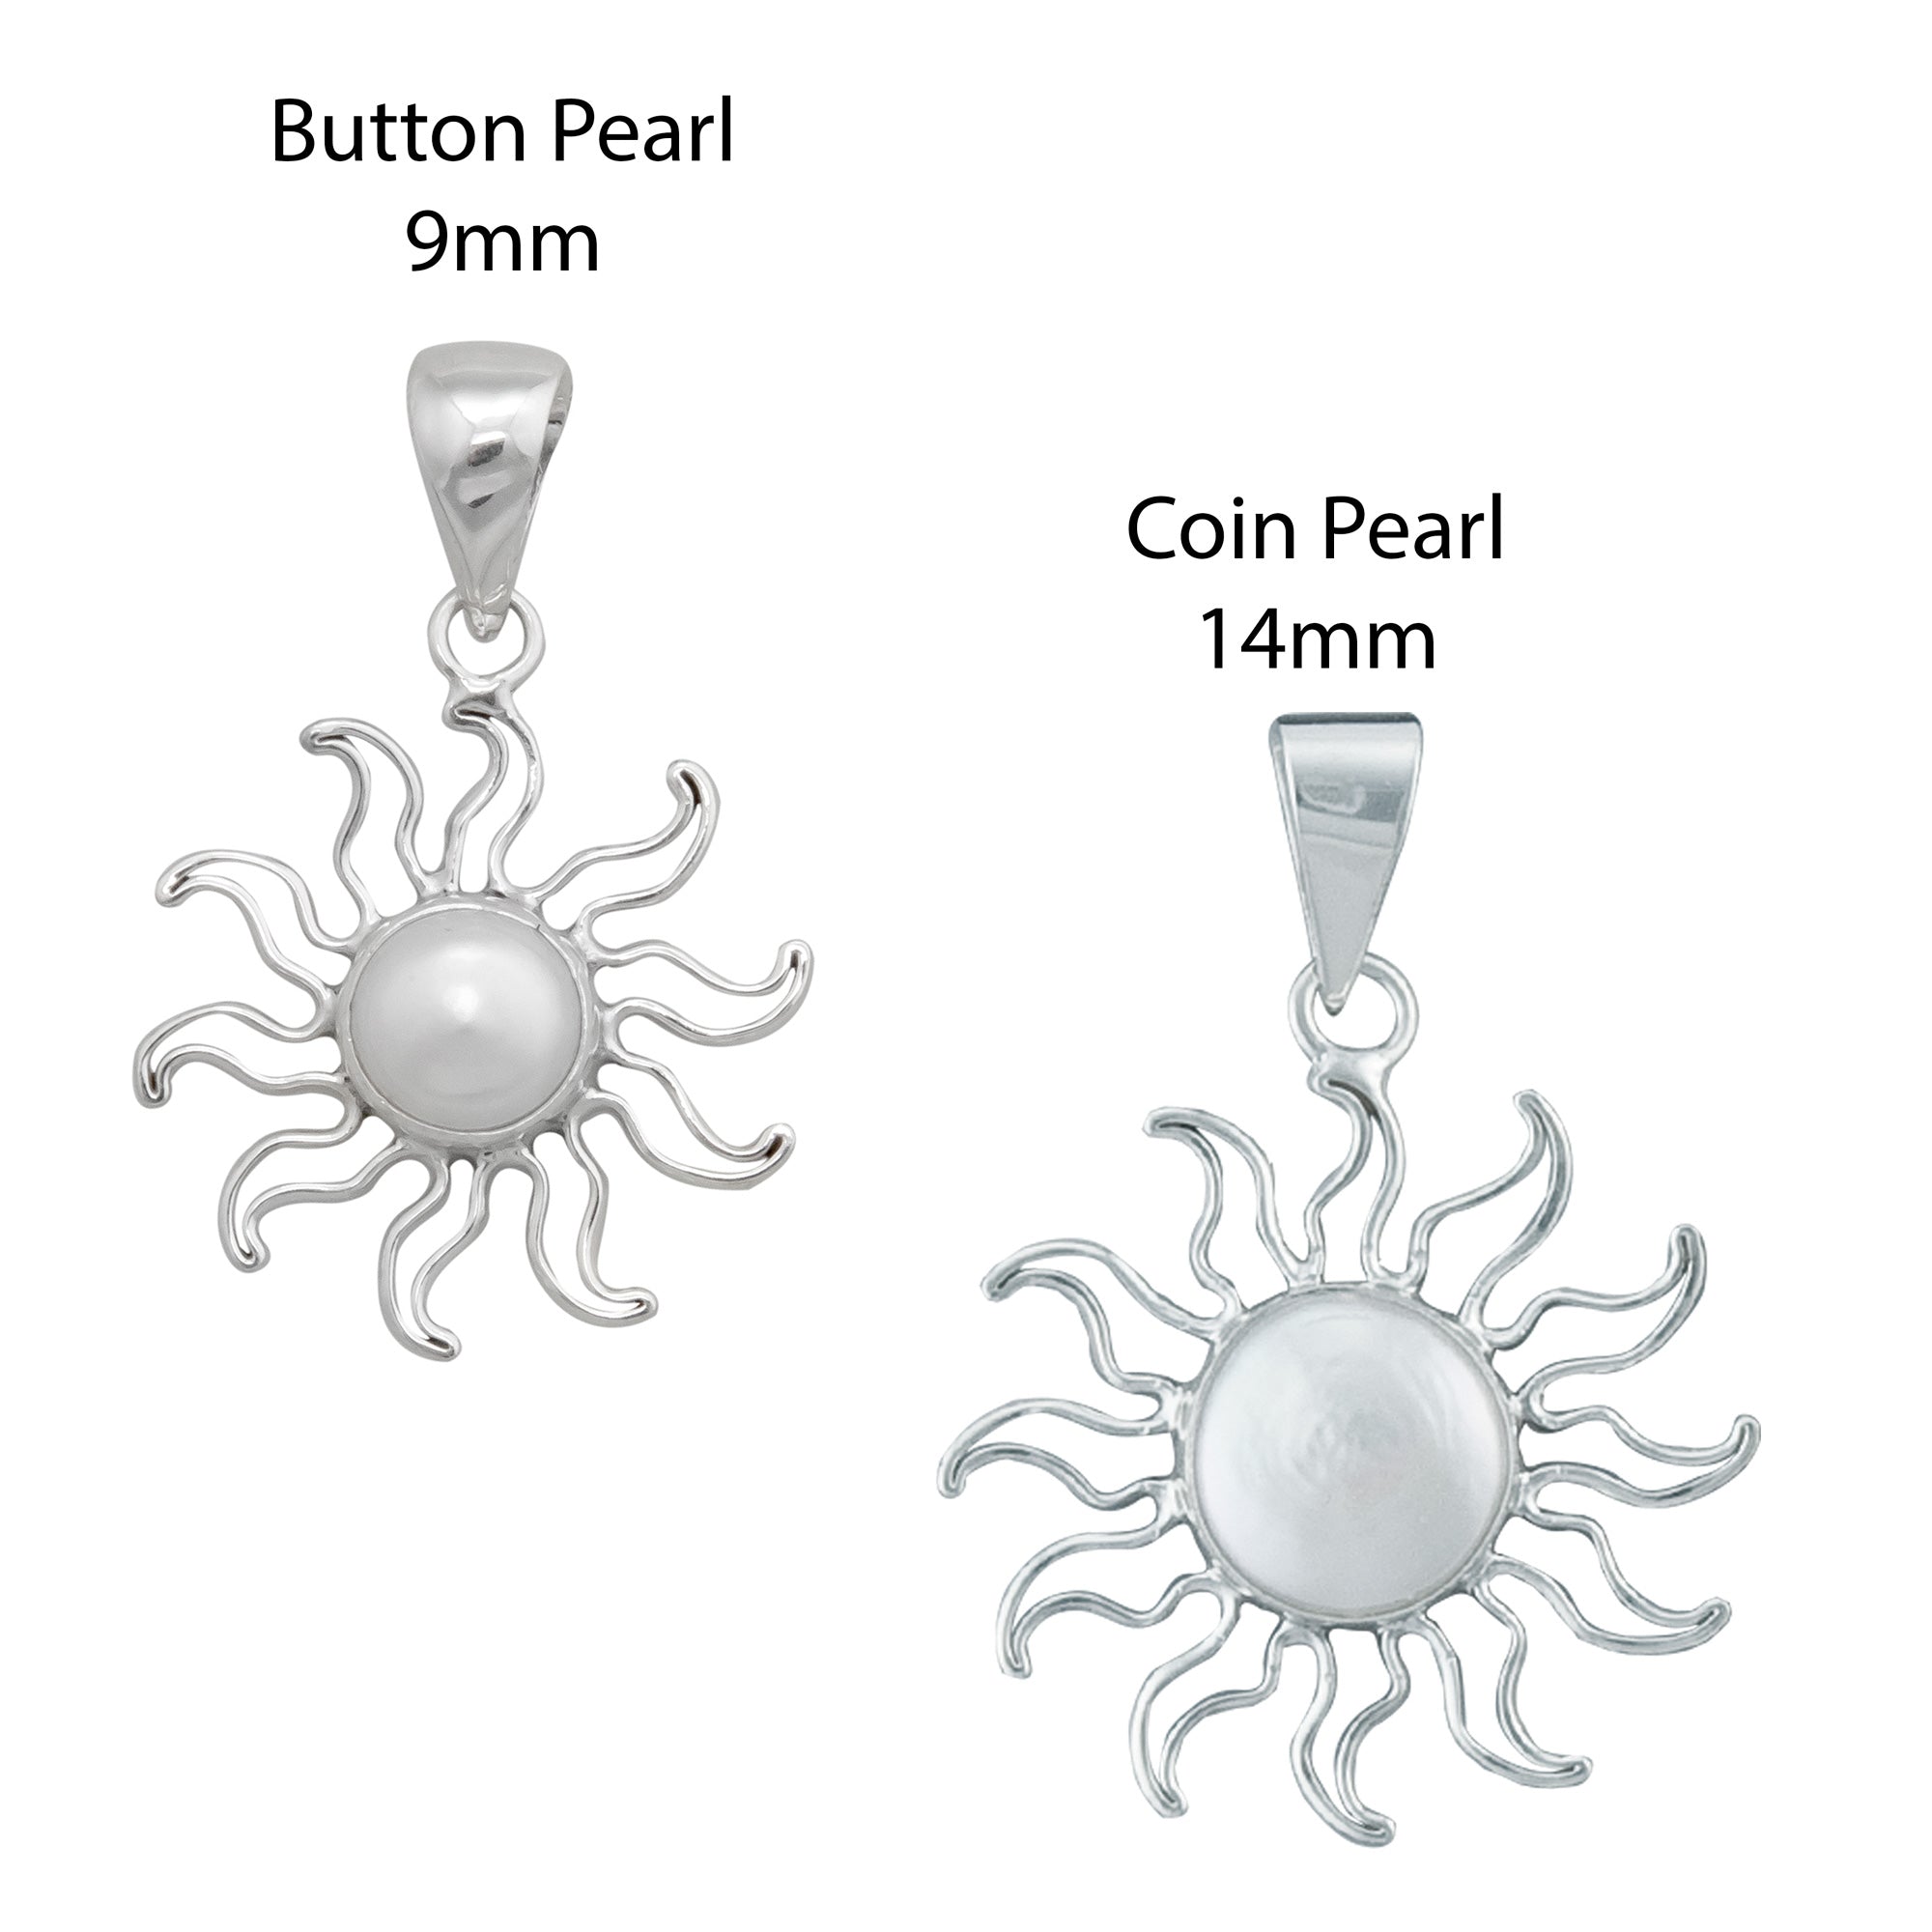 Sterling Silver Pearl Sun Pendant | Charles Albert Jewelry